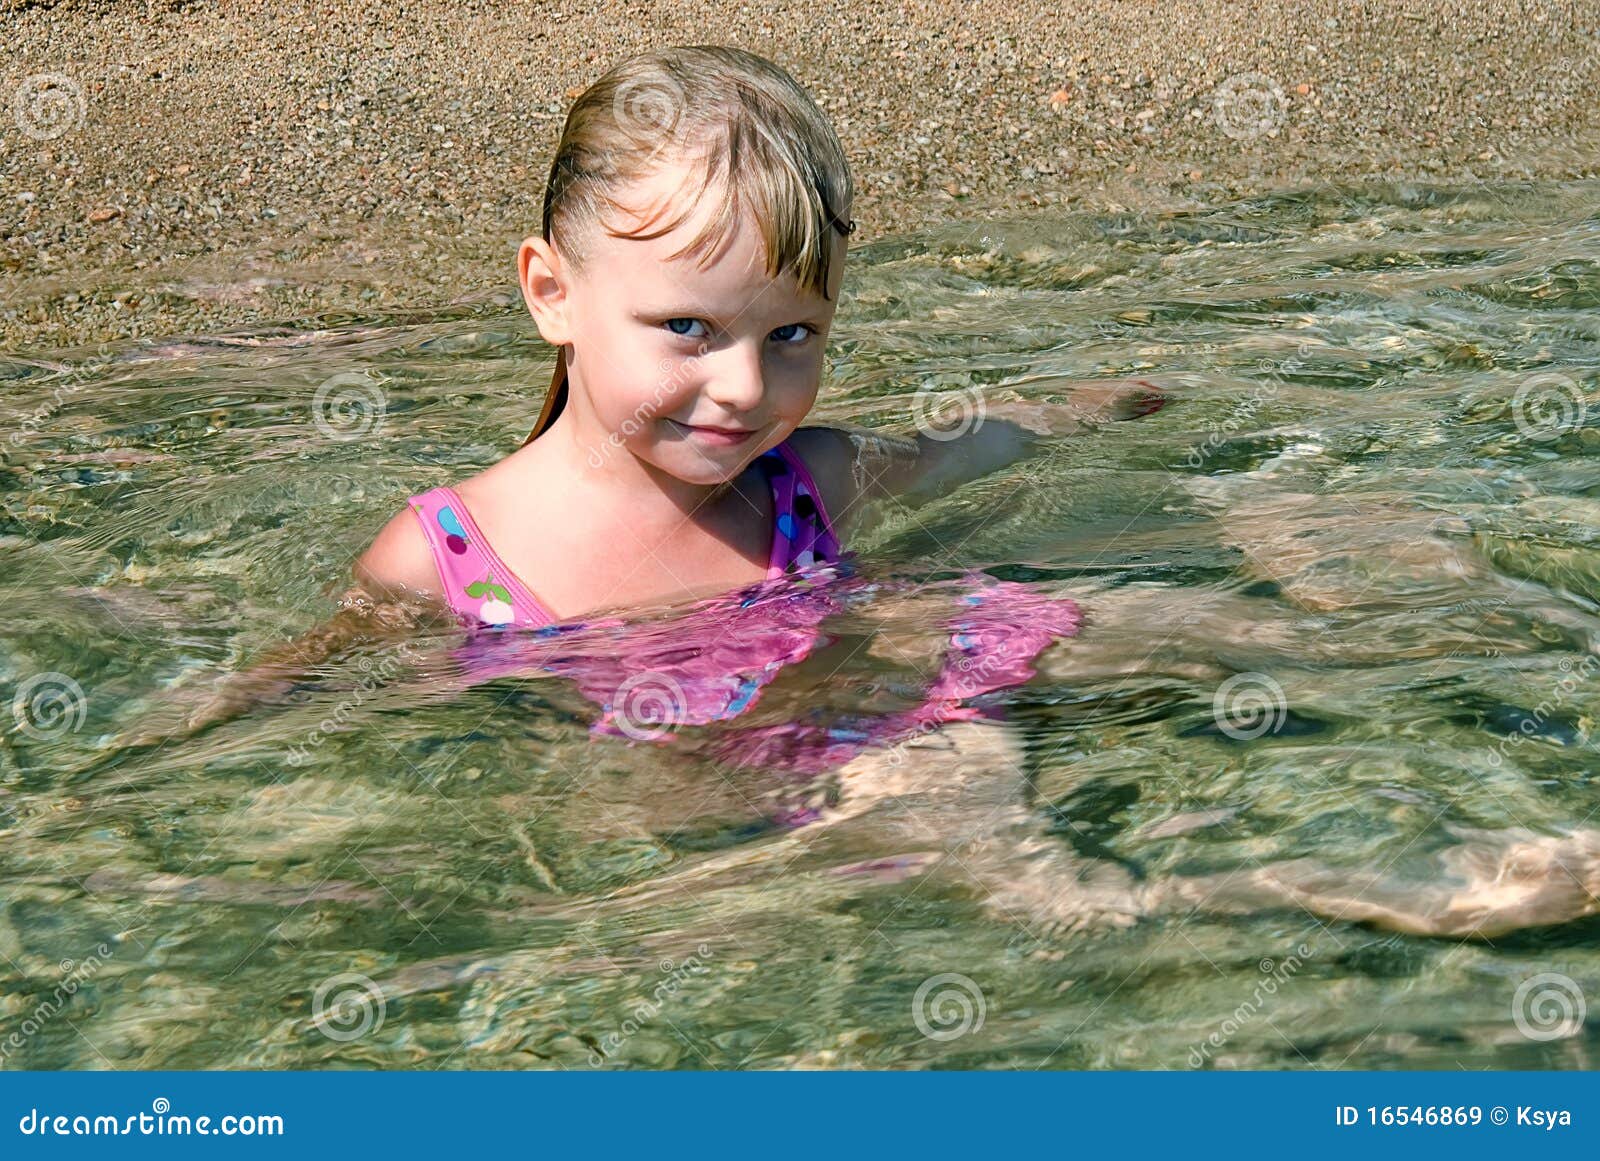 Swimming stock image. Image of bottom, female, gilr, leisure - 16546869